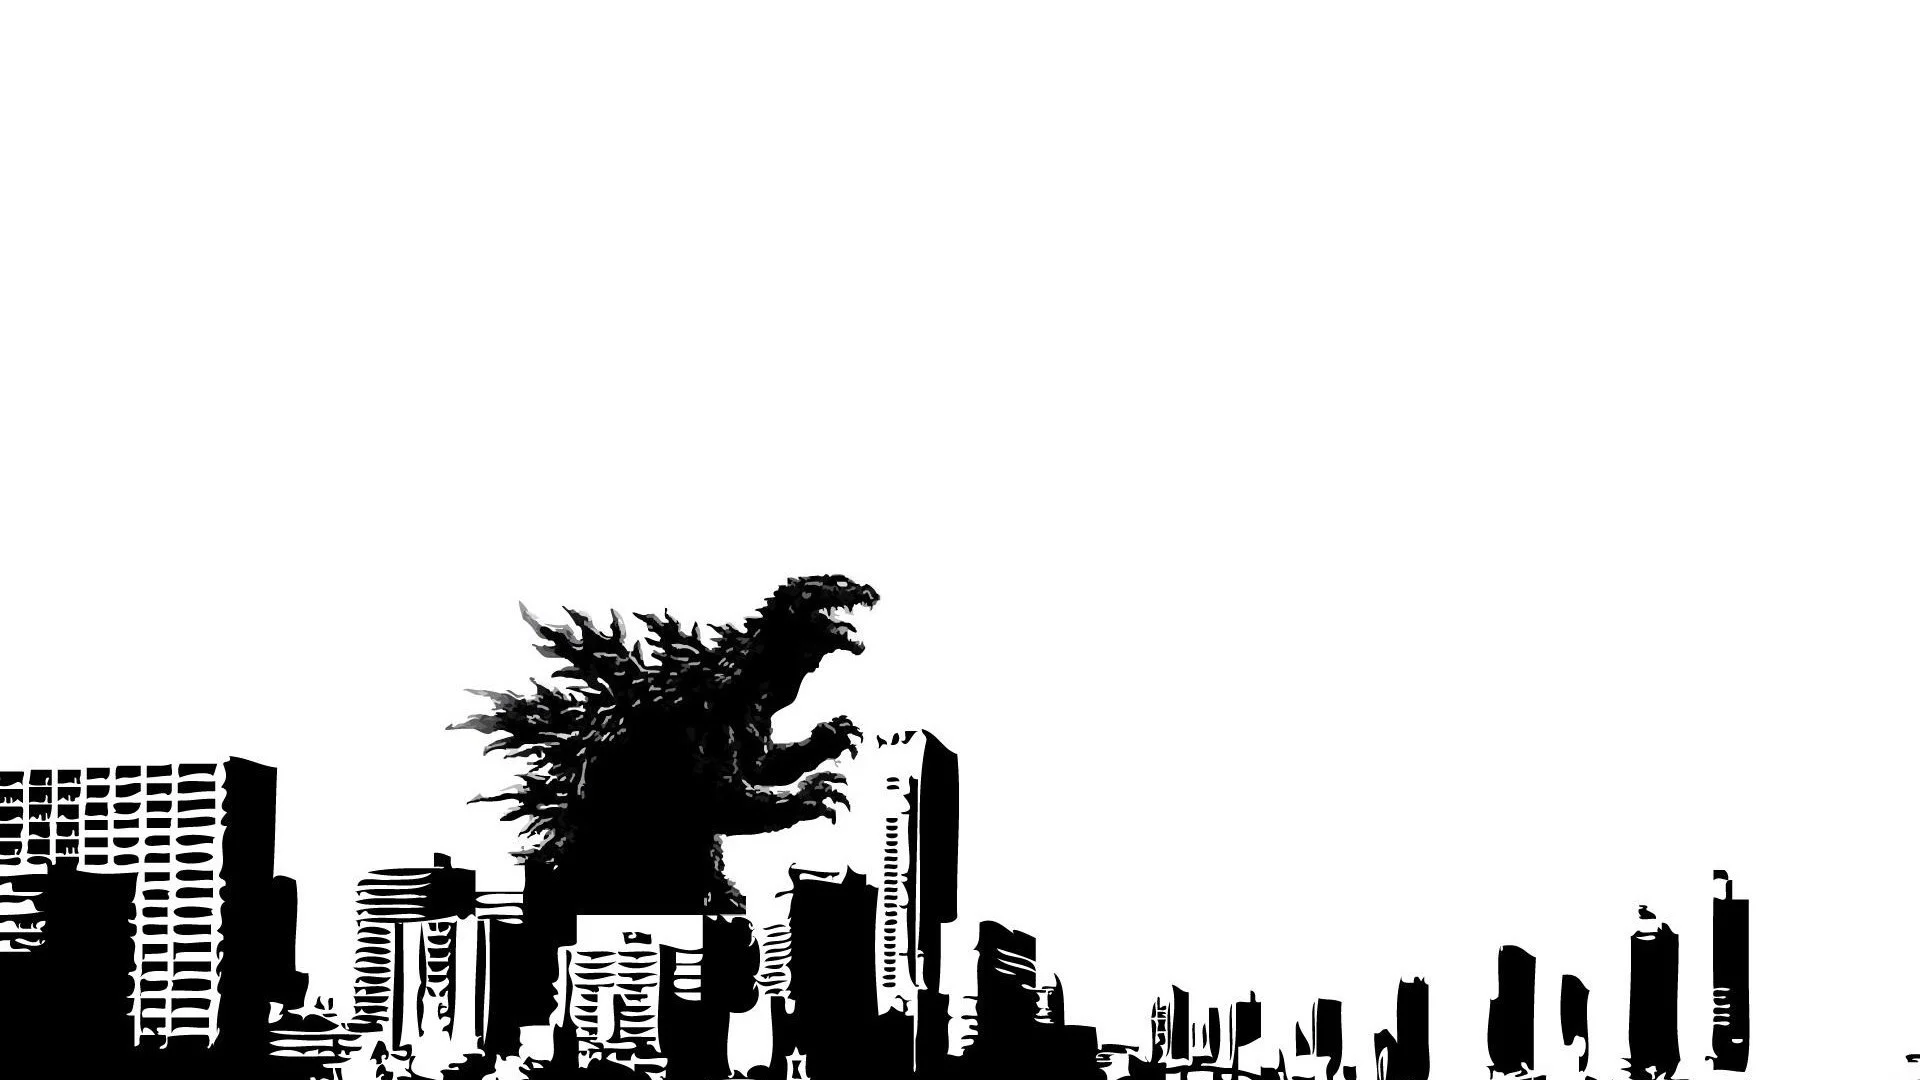 Godzilla wallpapers hd free download